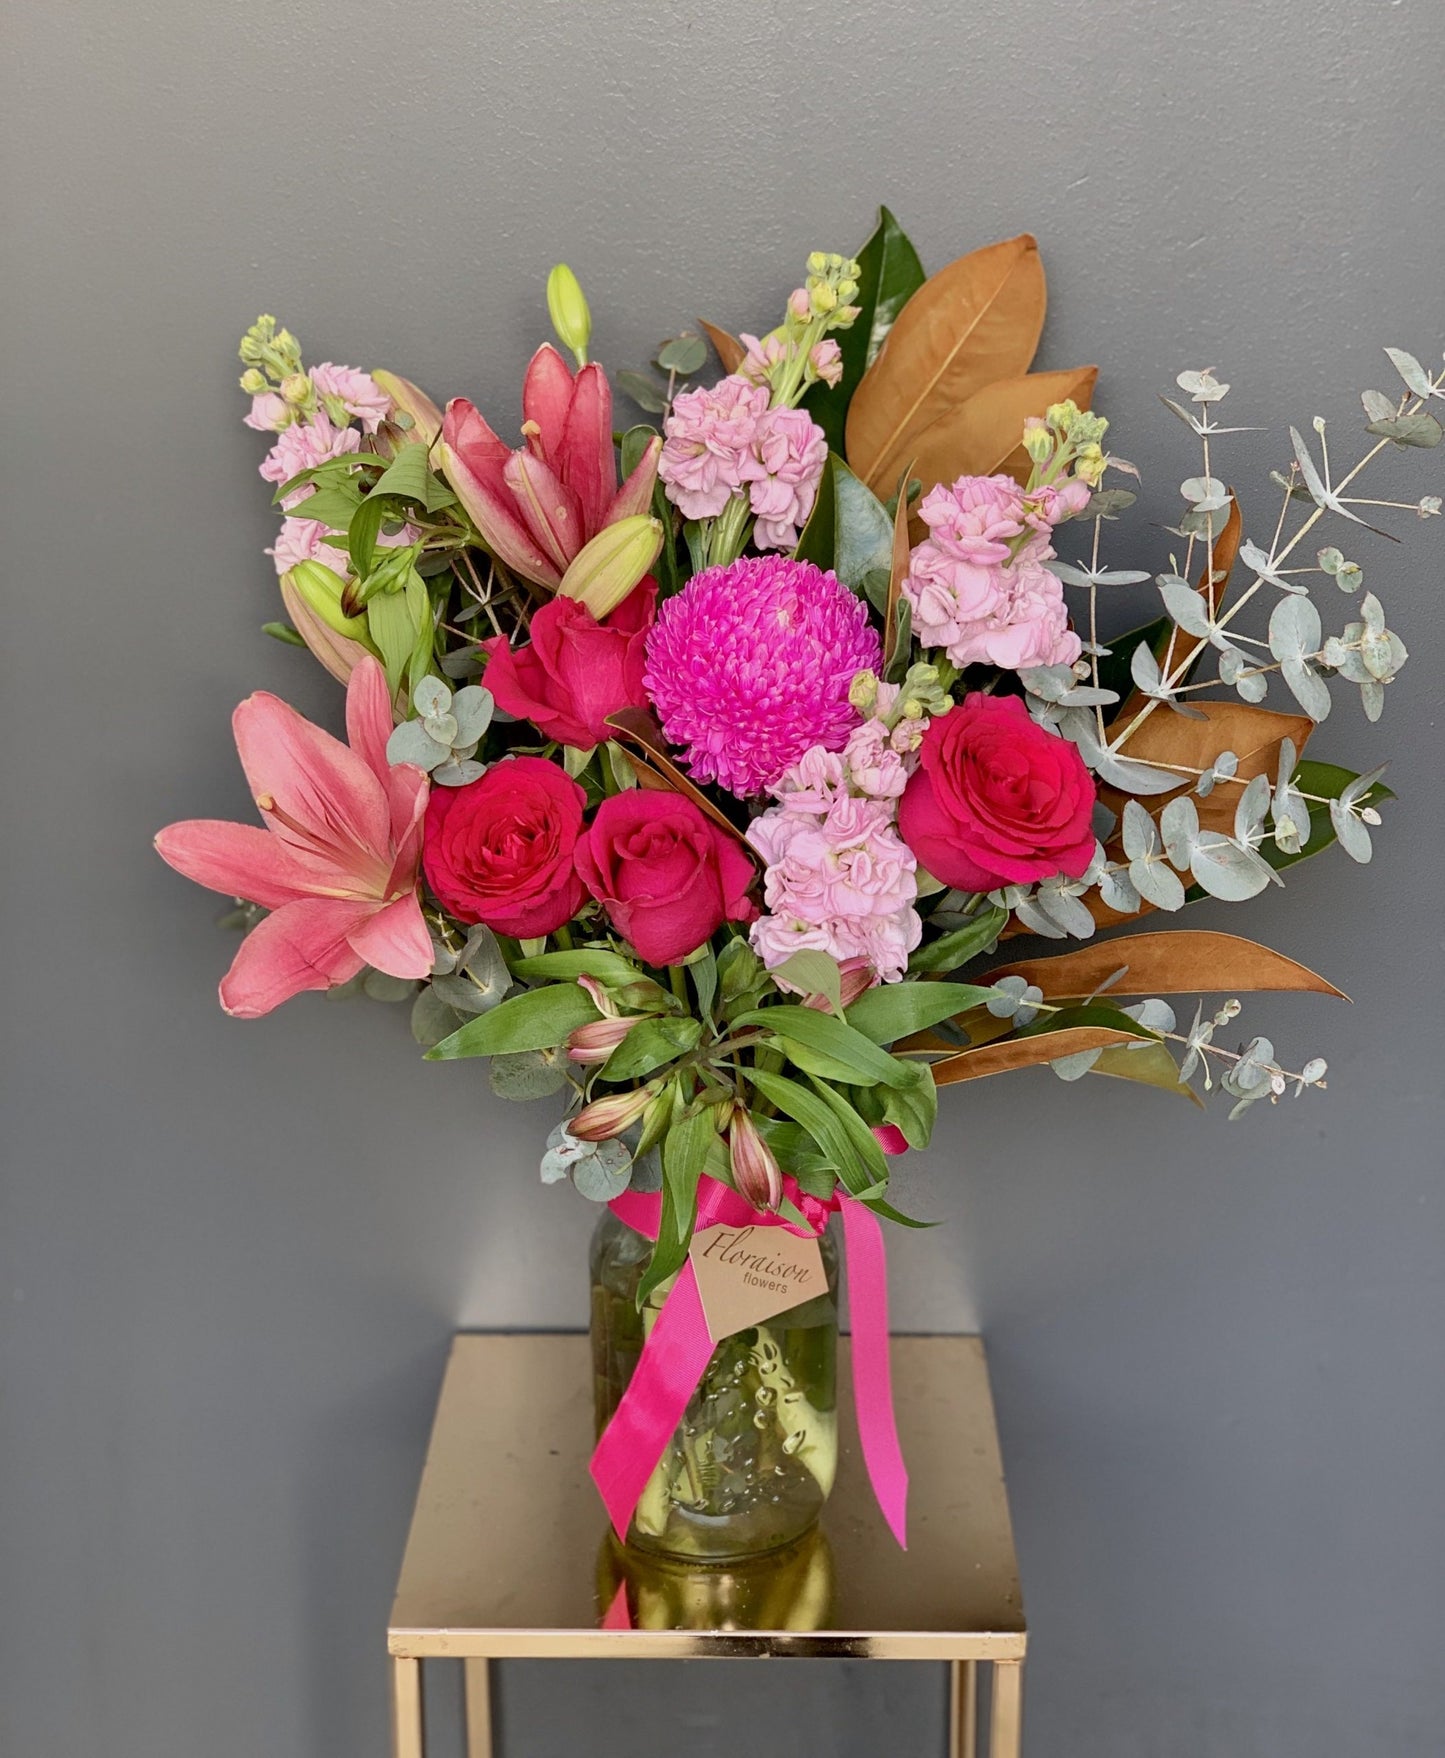 Florist Choice Flower Arrangement In A Jar Deluxe (Hot Pink Theme)